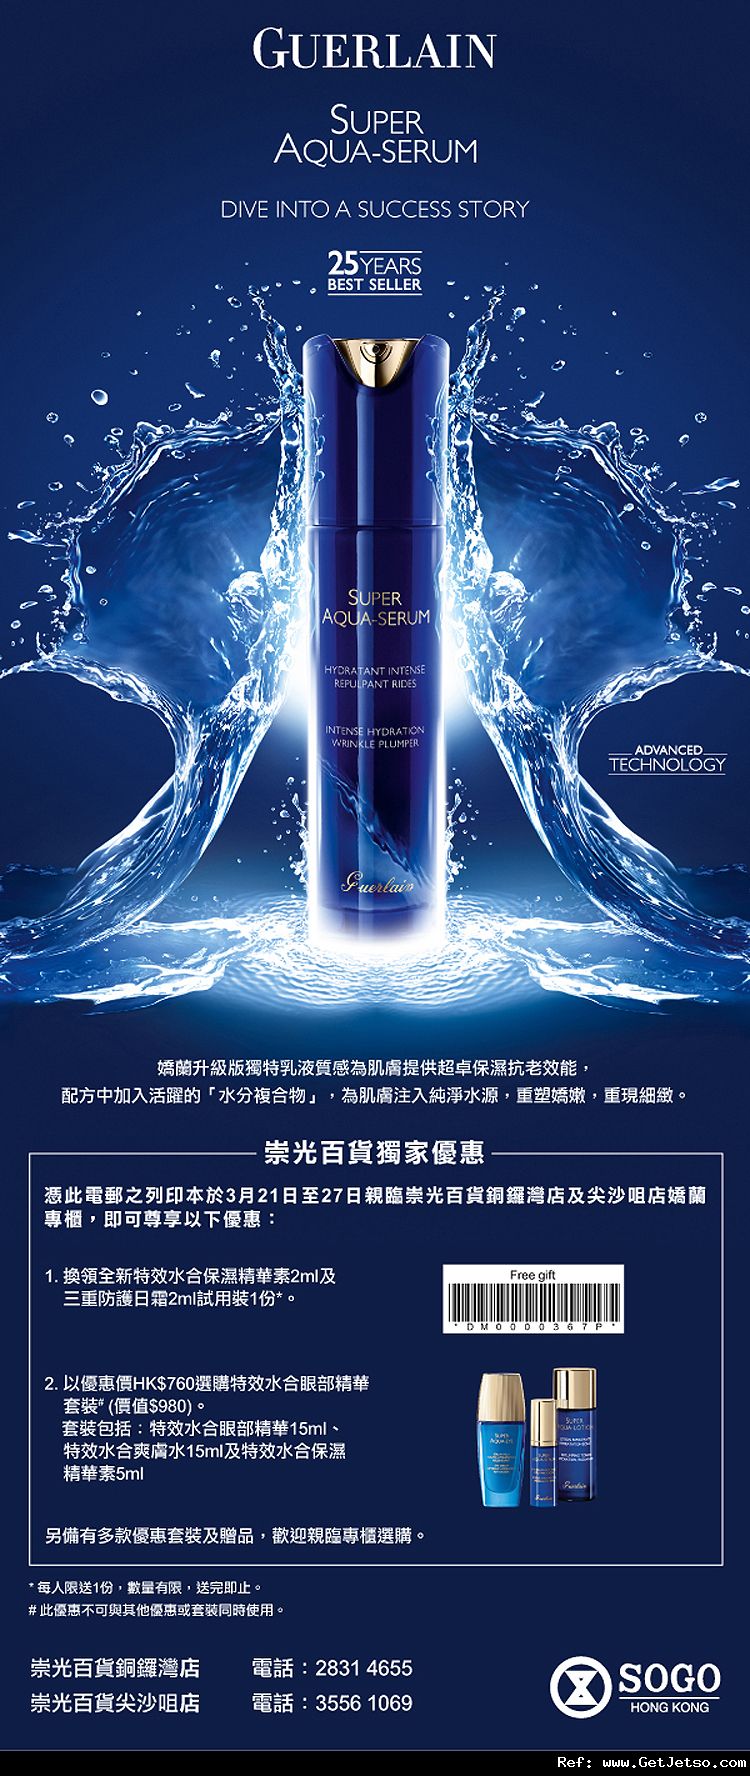 Guerlain Super Aqua Serum 試用裝及購買優惠@銅鑼灣崇光(至12年3月27日)圖片1